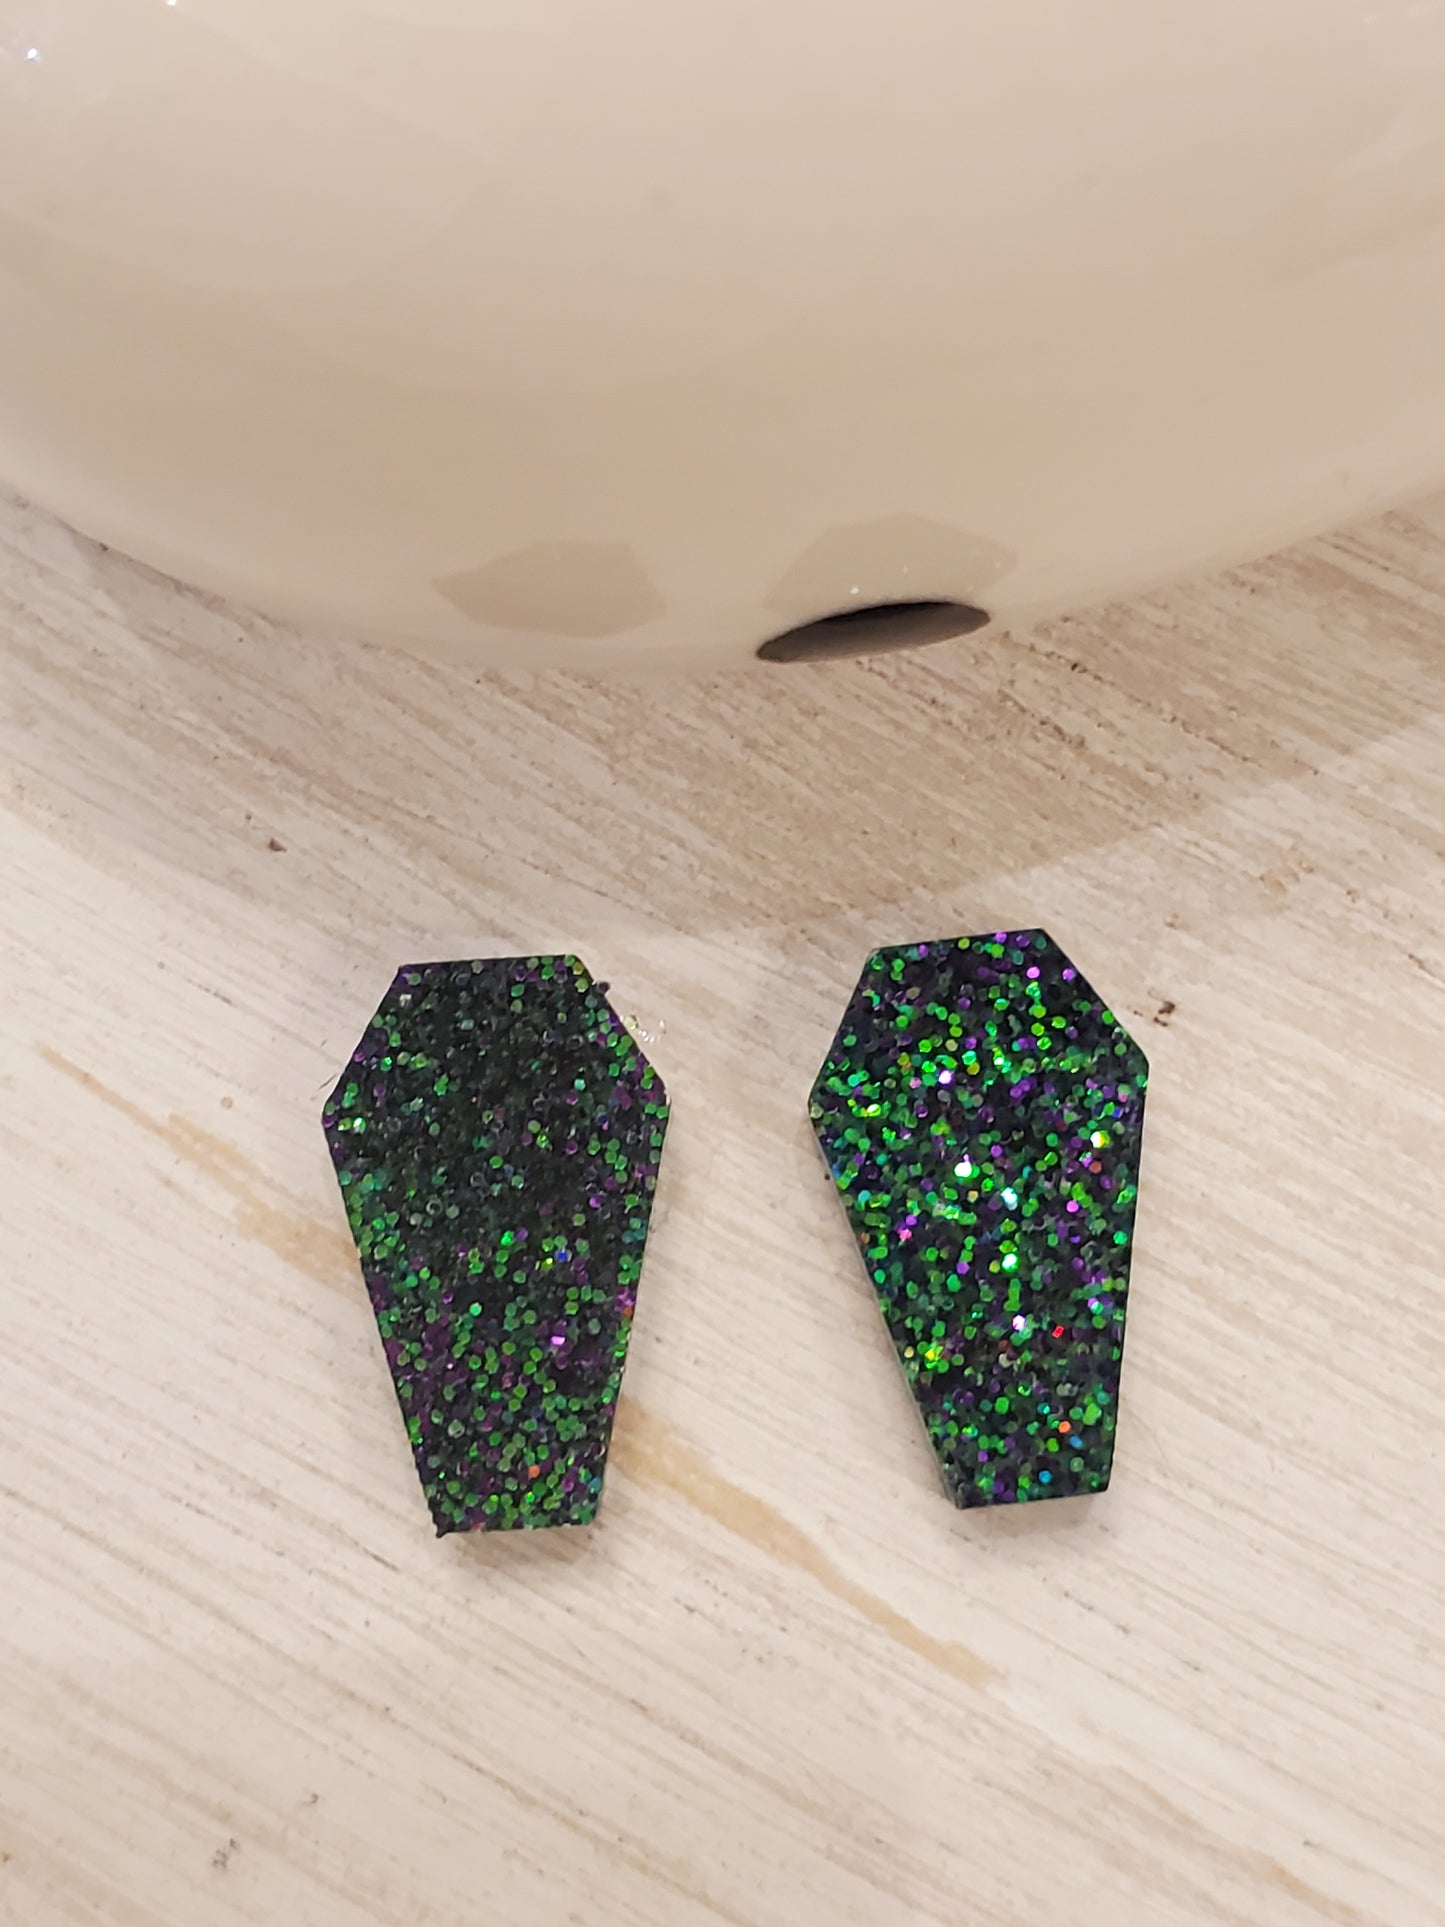 Handmade resin and glitter Coffin green/purple earrings small studs